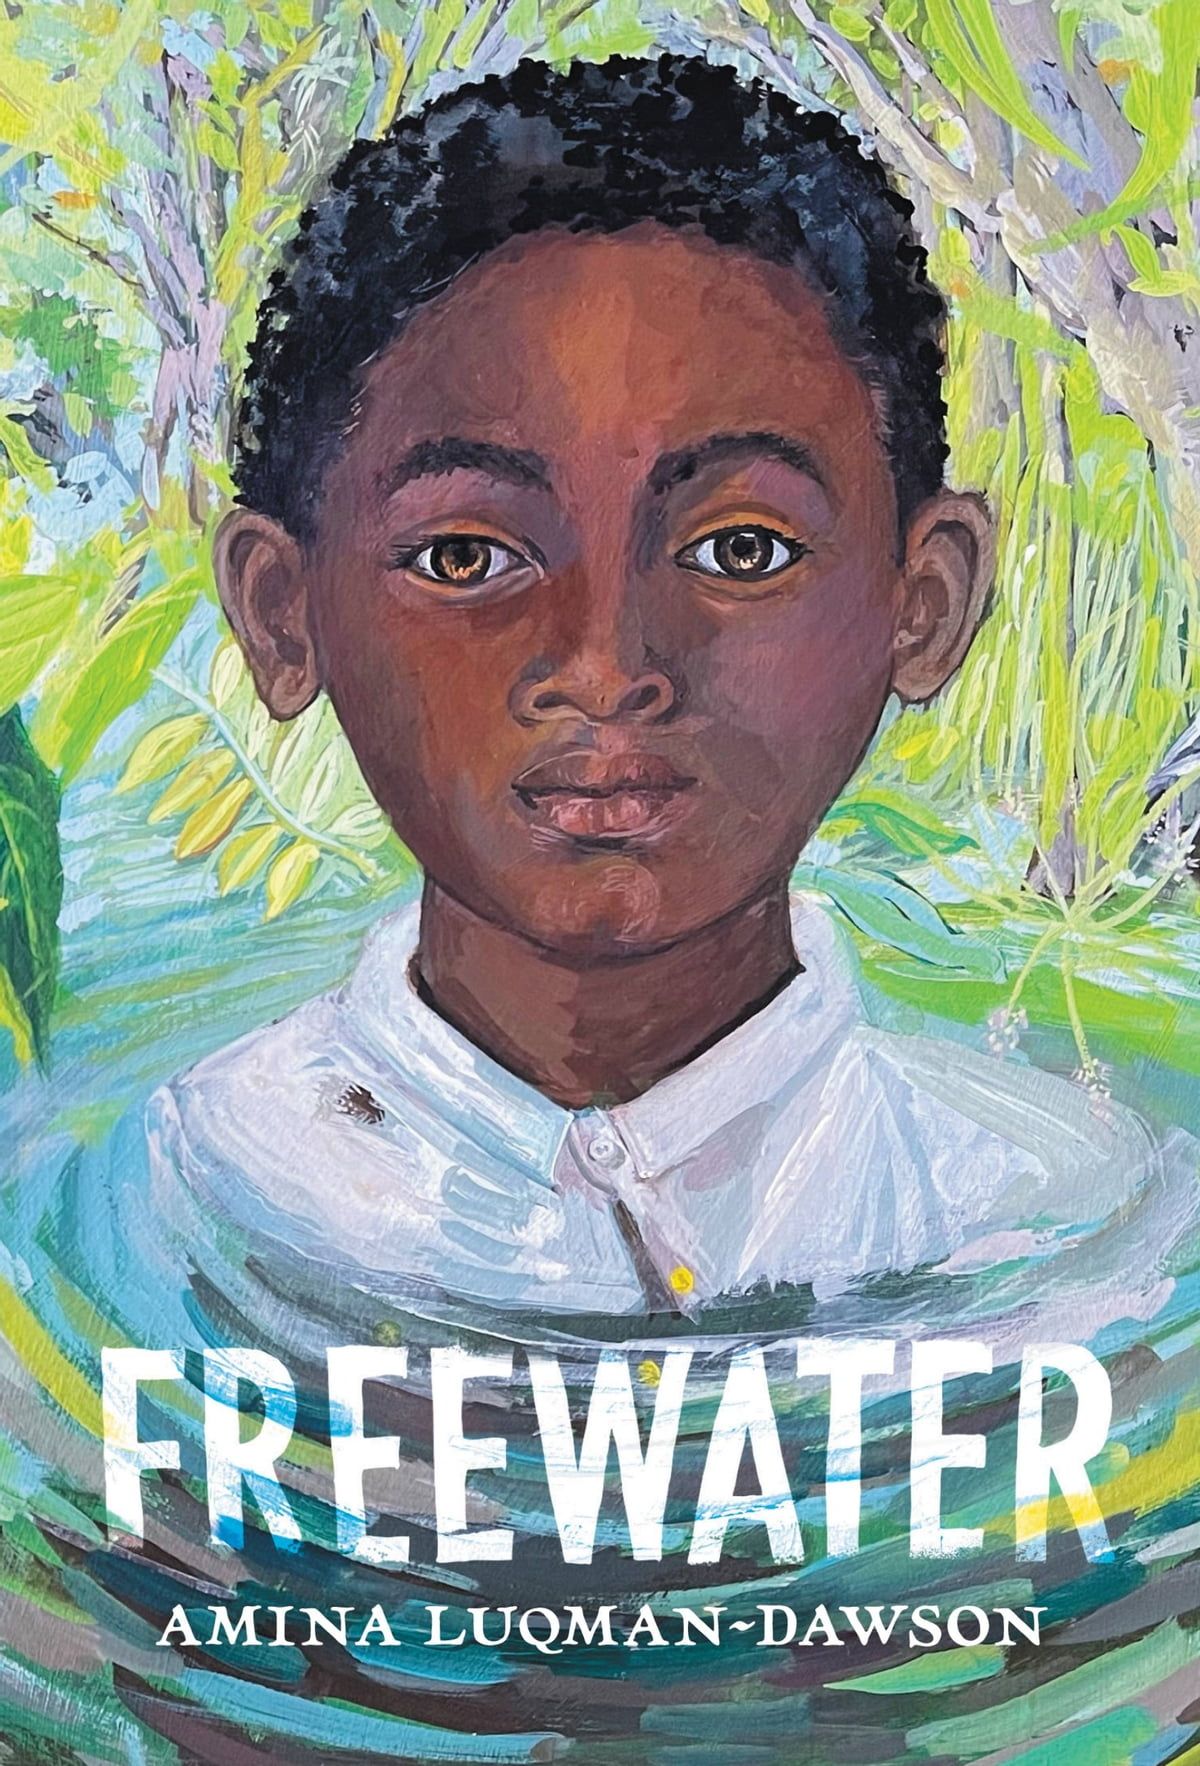 the cover of Freewater by Amina Luqman-Dawson